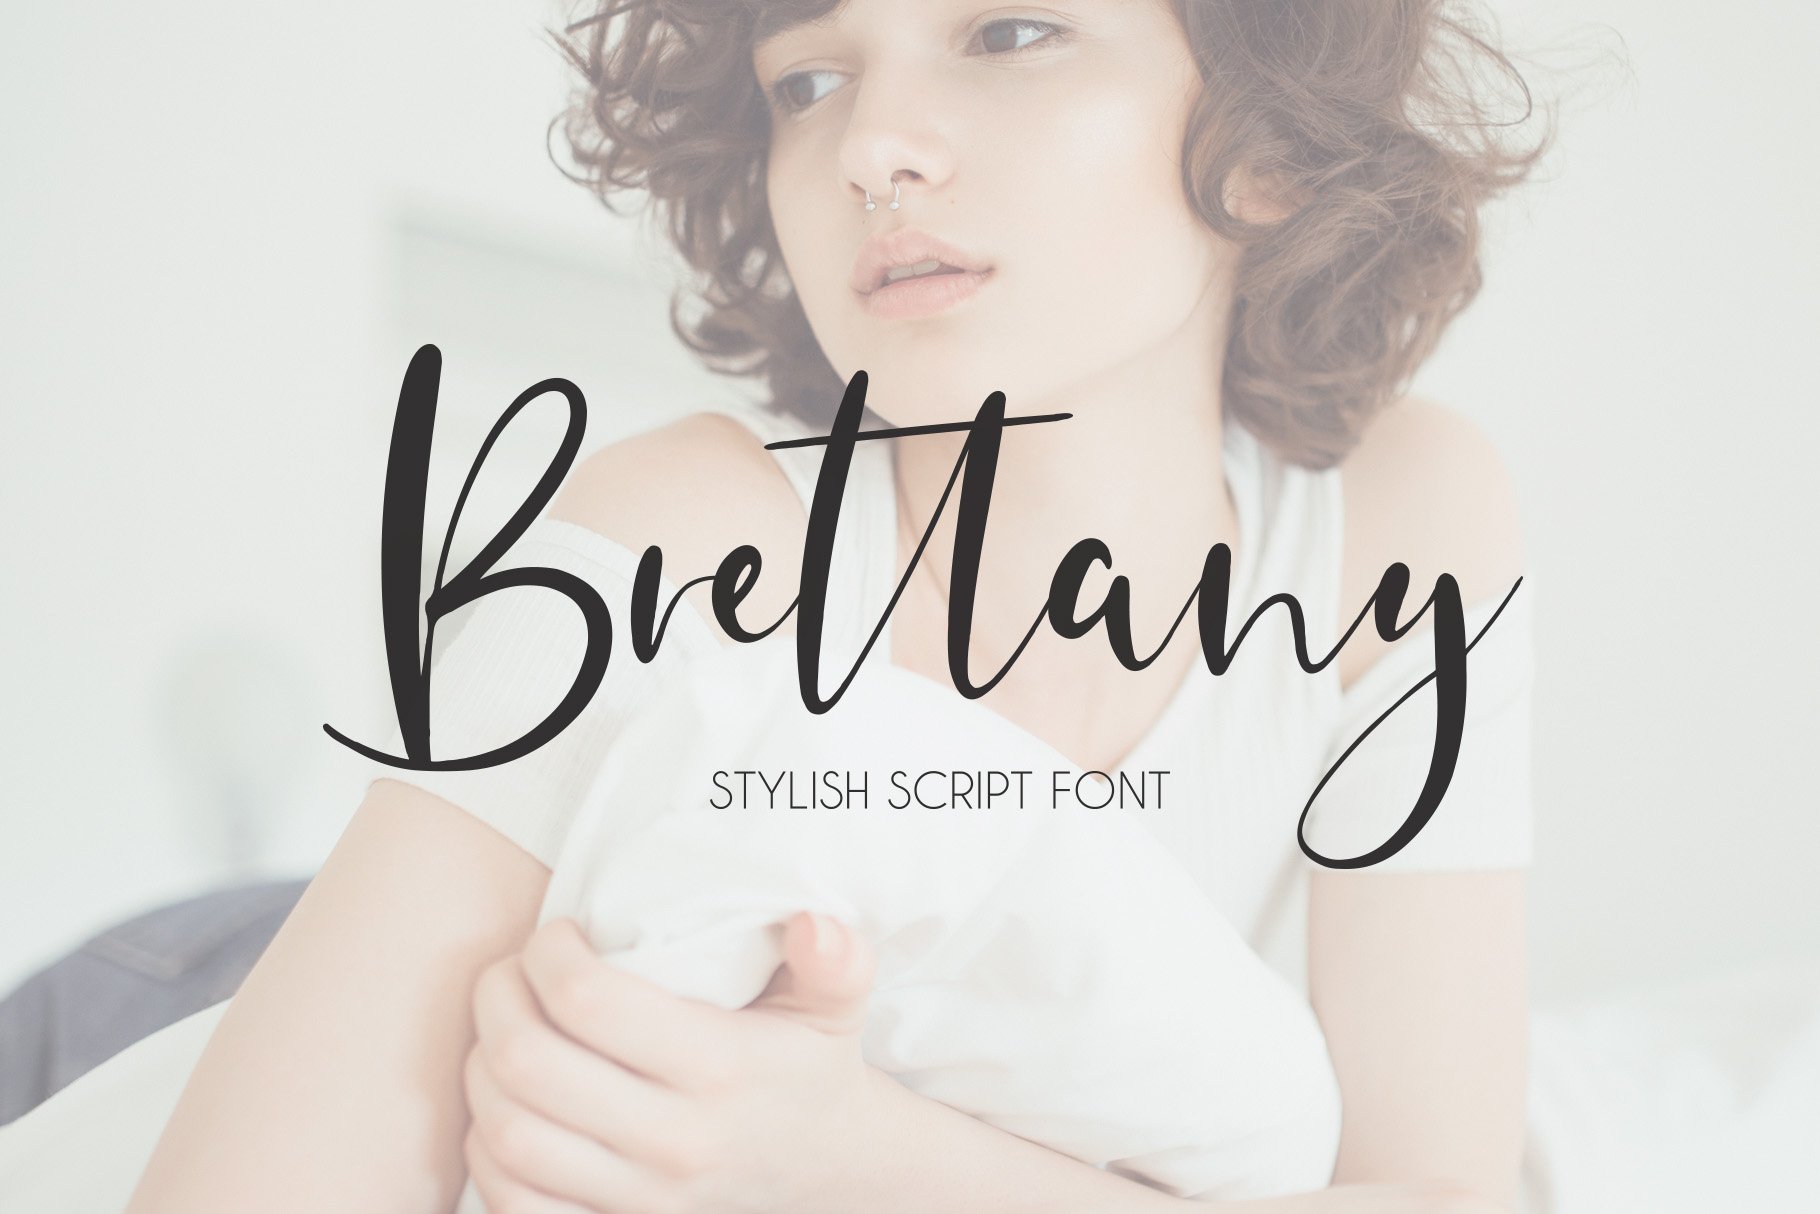 Brettany Script Font cover image.